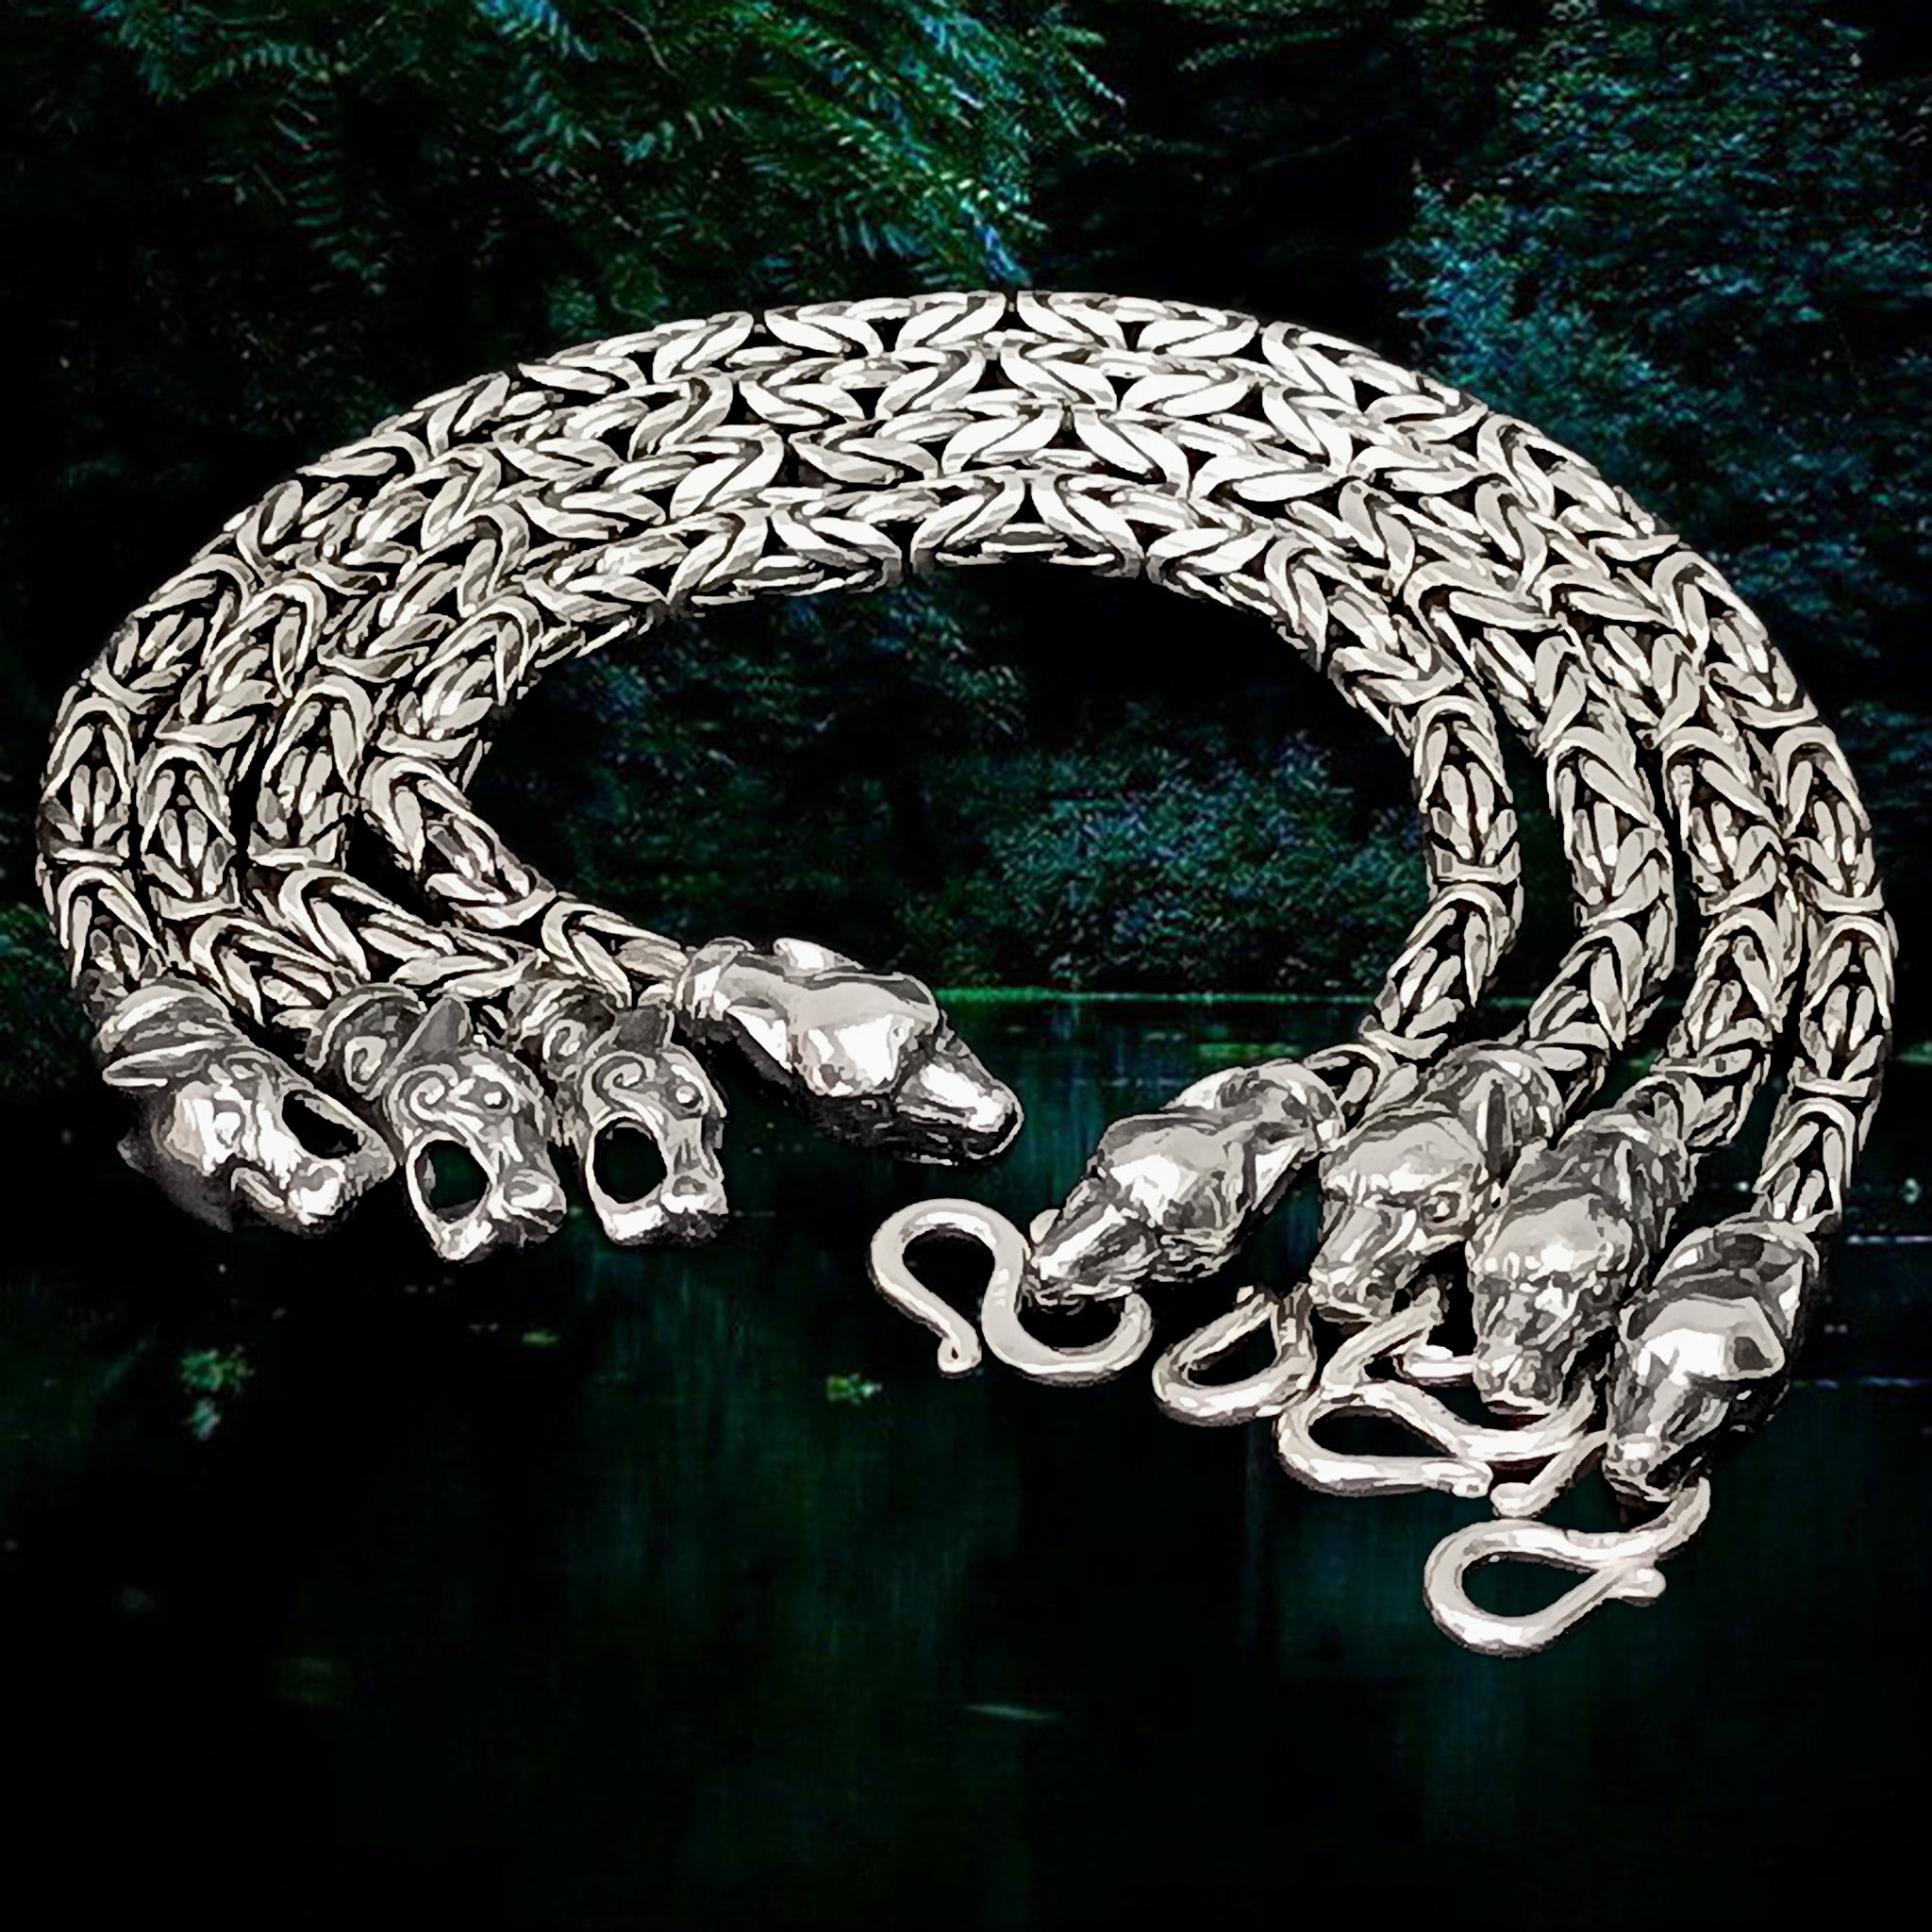 Buy online Lv Charms Bracelet In Pakistan, Rs 1800